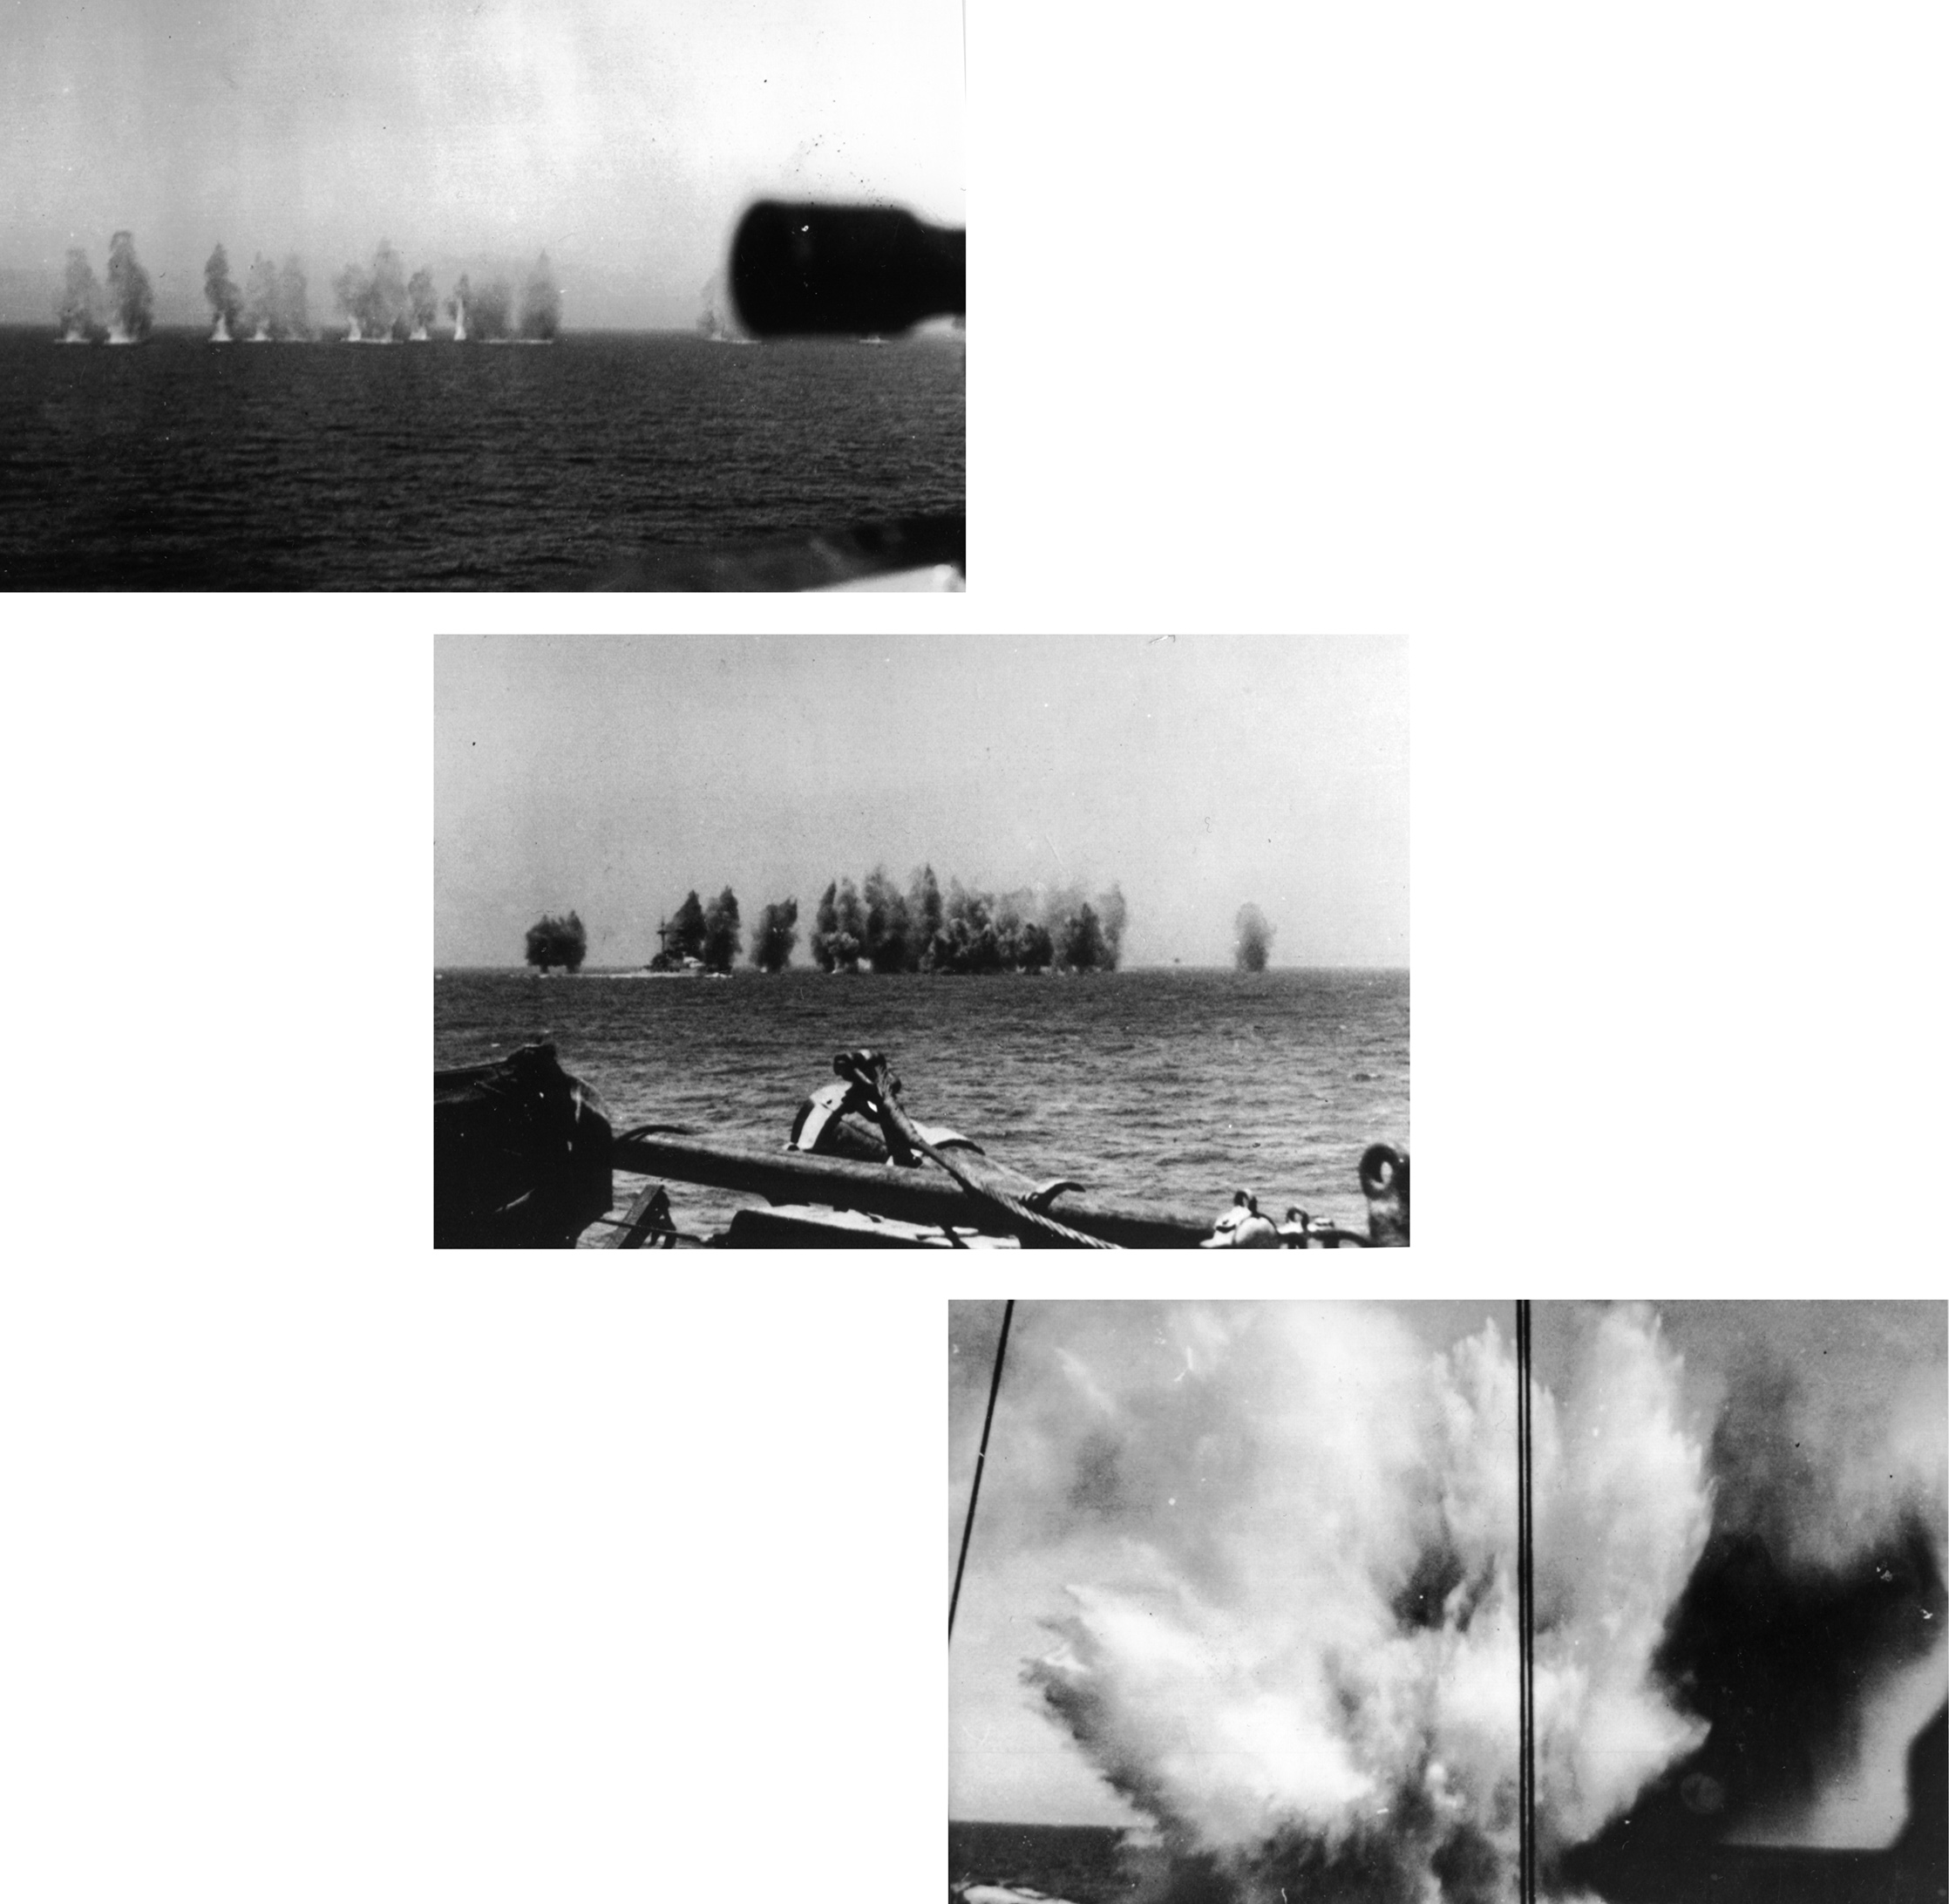 HMA Valiant, HMS Illustrious and HMS Warspite bombed off Malta